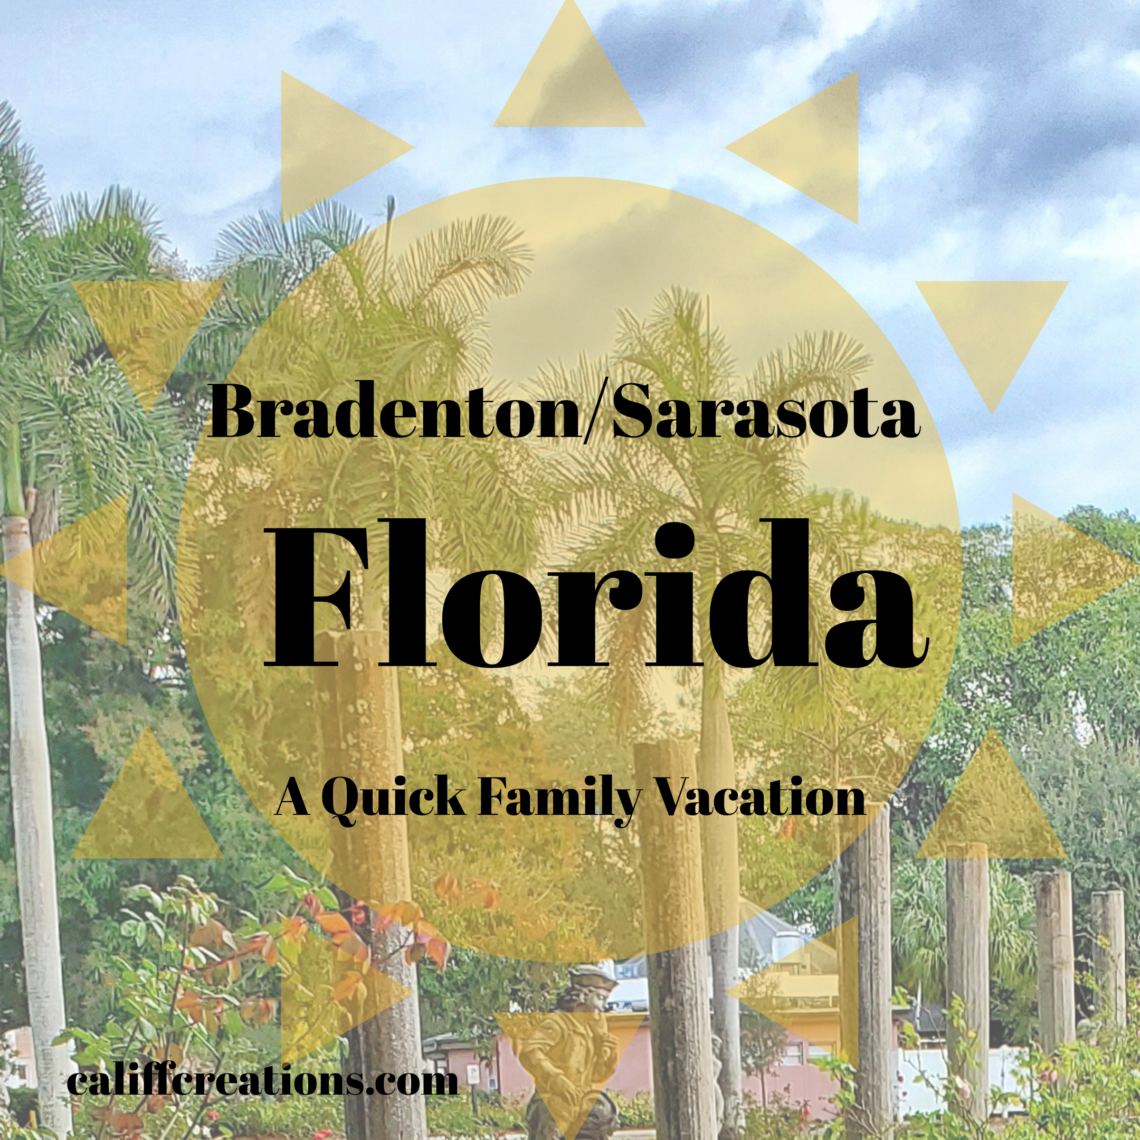 Bradenton Sarasota Florida, A Quick Family Vacation